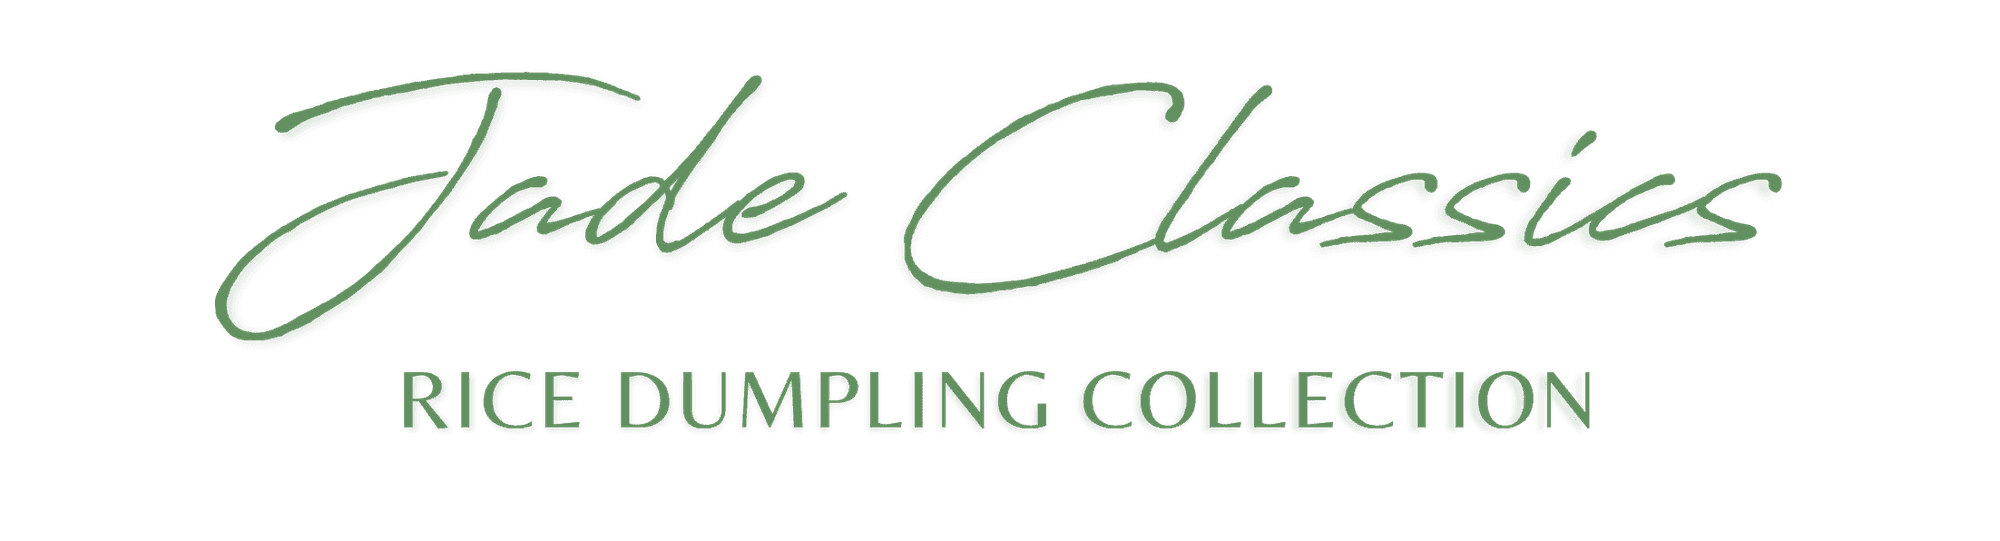 Jade Classics Rice Dumpling Collection logo used at Fullerton Group